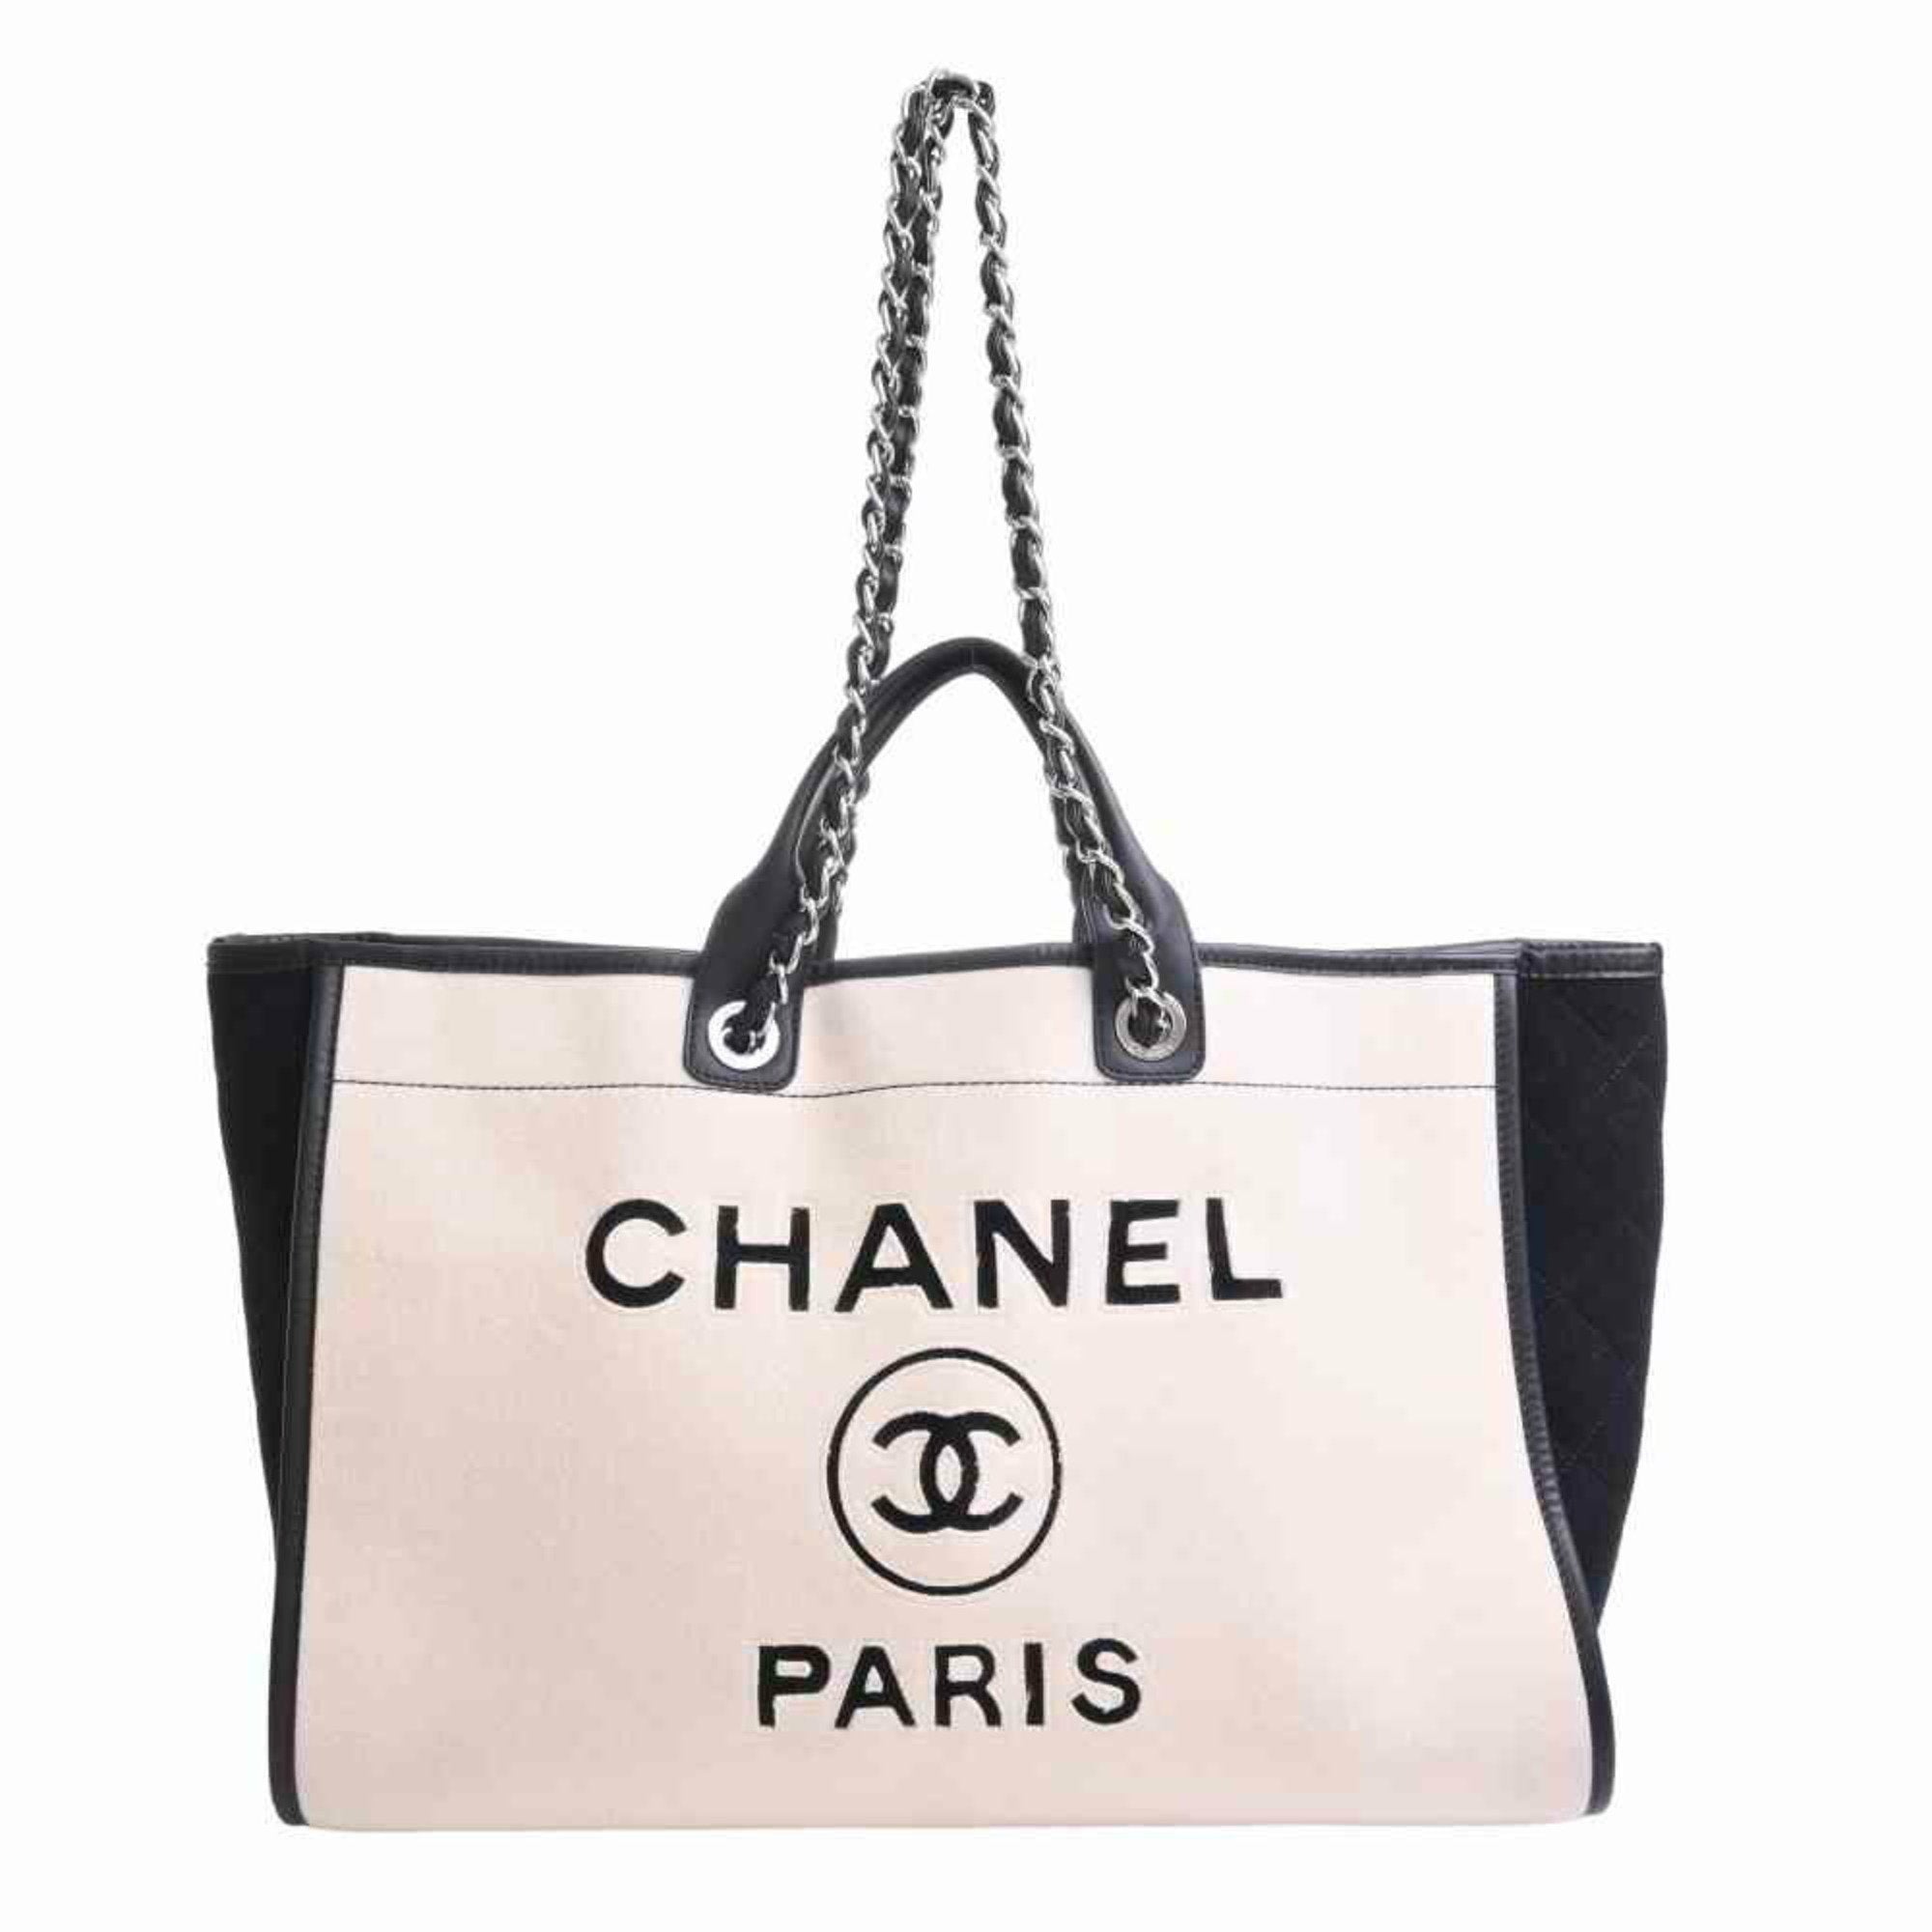 Chanel felt Deauville large chain tote bag white black